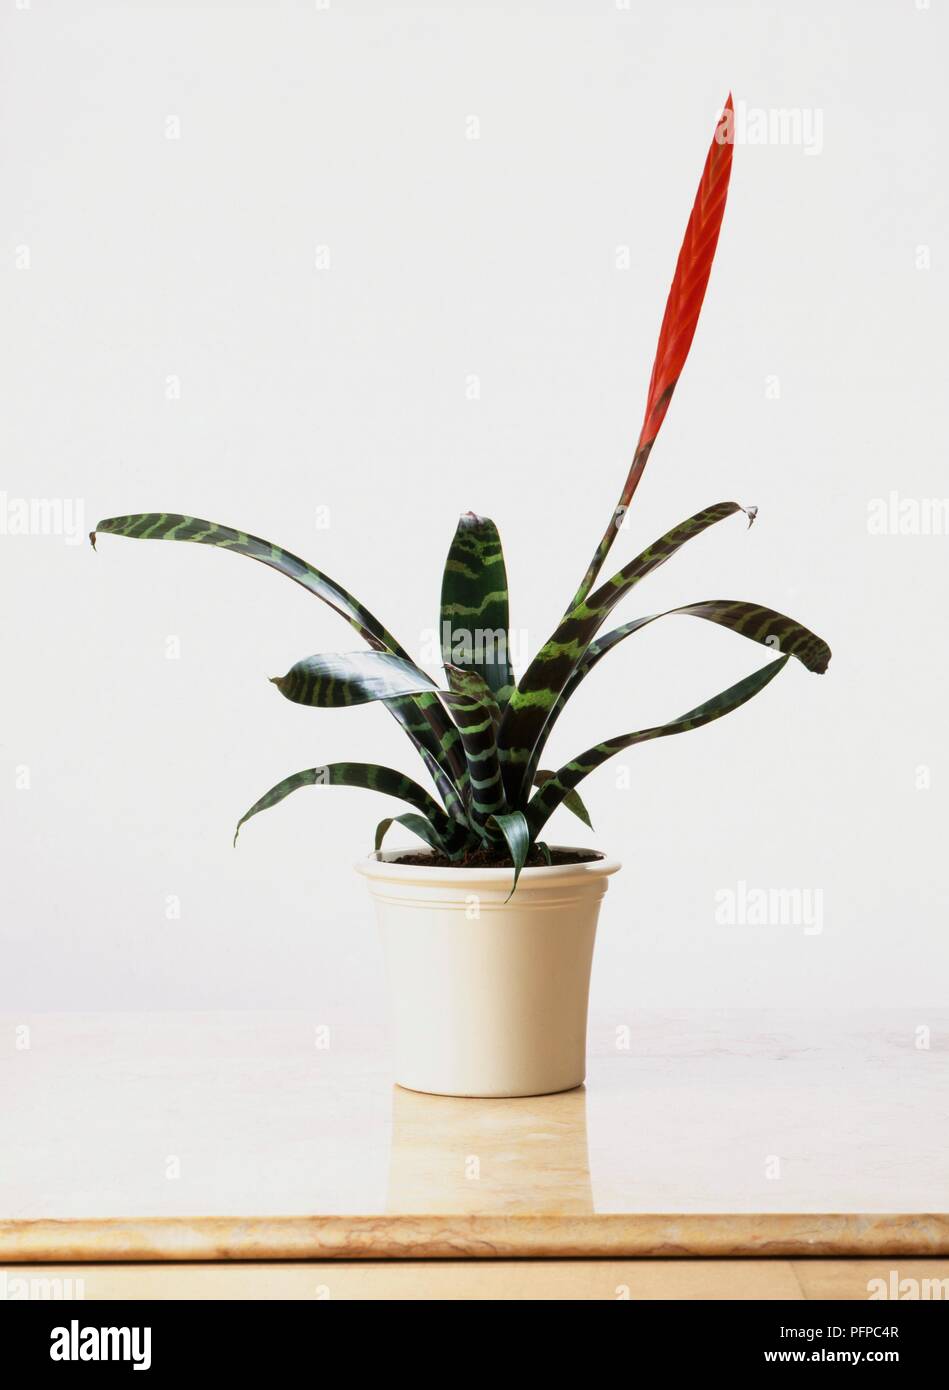 Vriesea splendens (spada fiammeggiante) mostra infiorescenza rosso e variegata di foglie, in vaso di ceramica Foto Stock